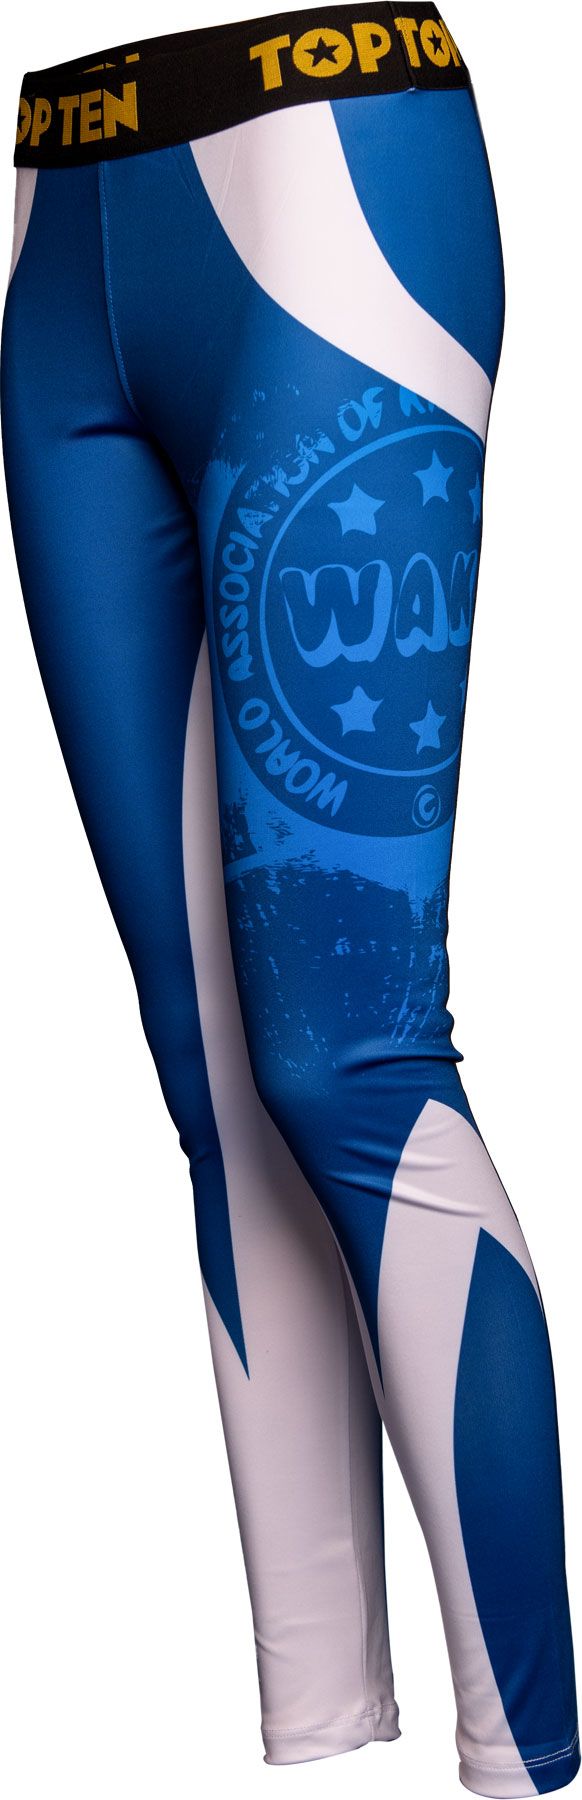 Top Ten workout leggings WAKO - blue